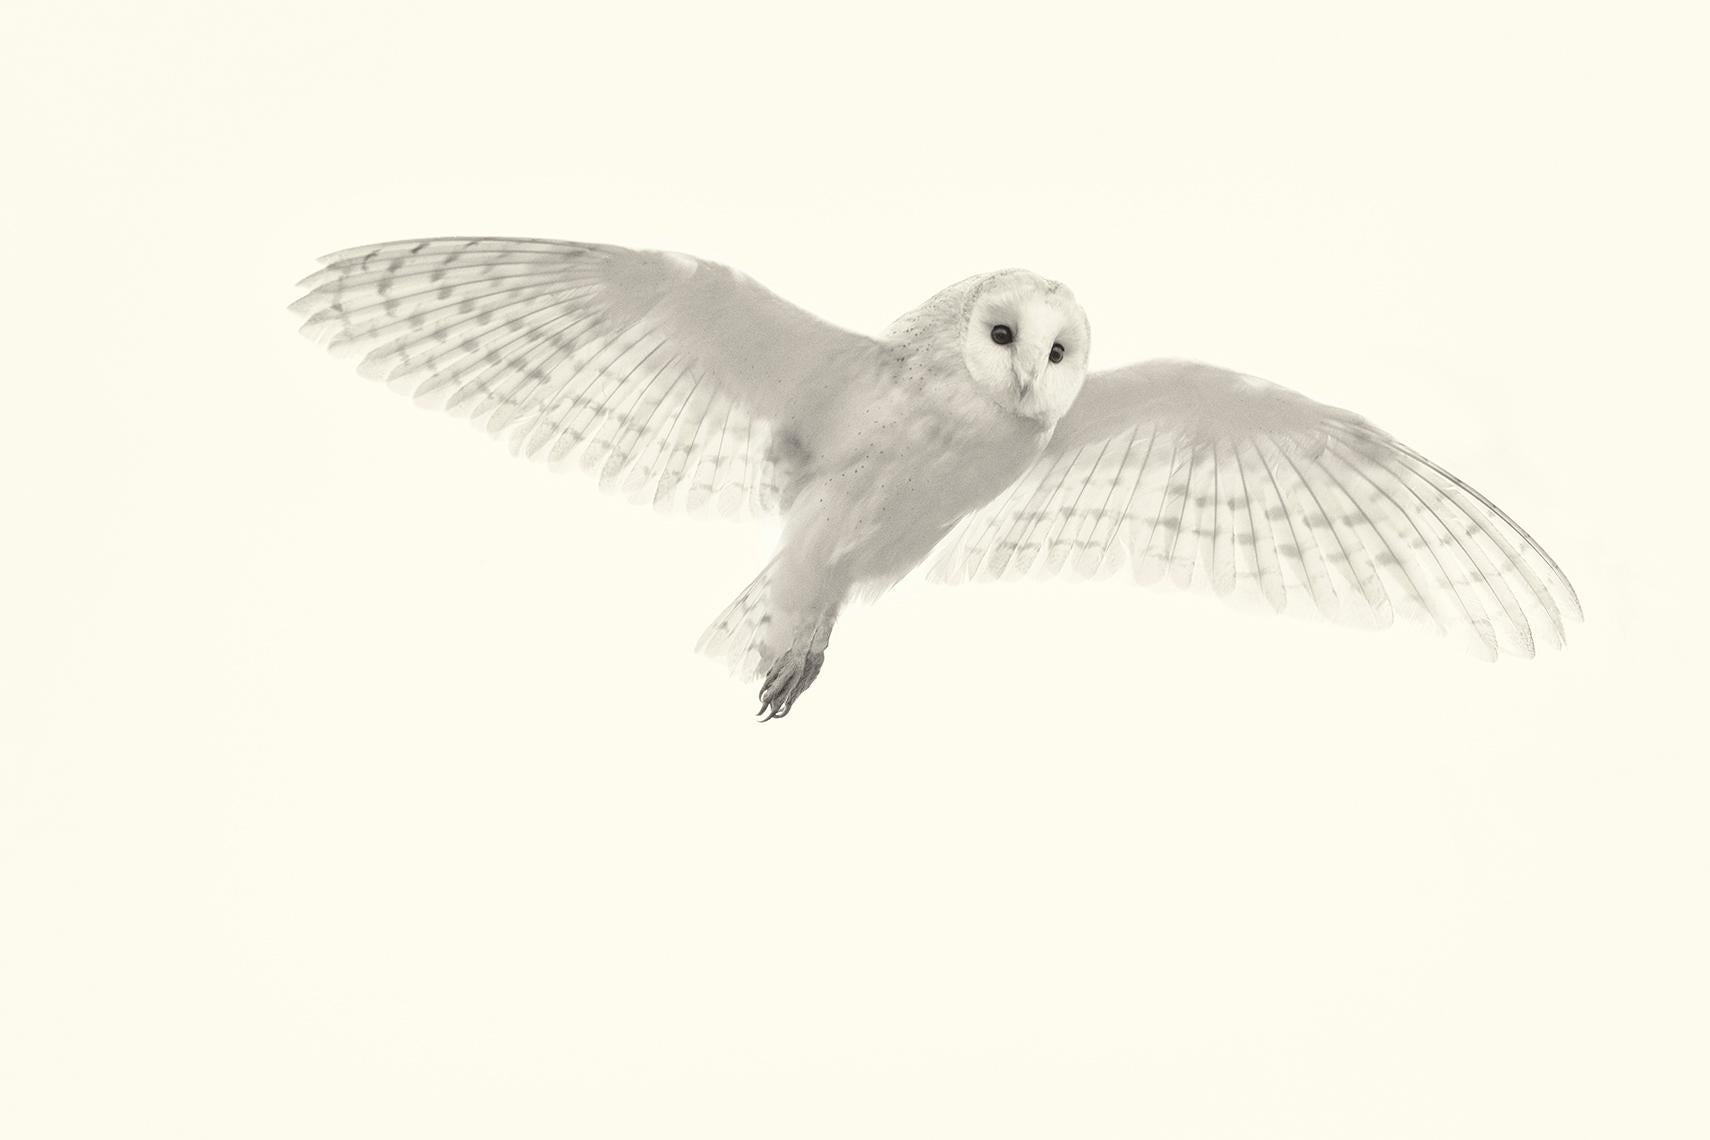 Beth Moon Animal Print - Barn Owl Study 2